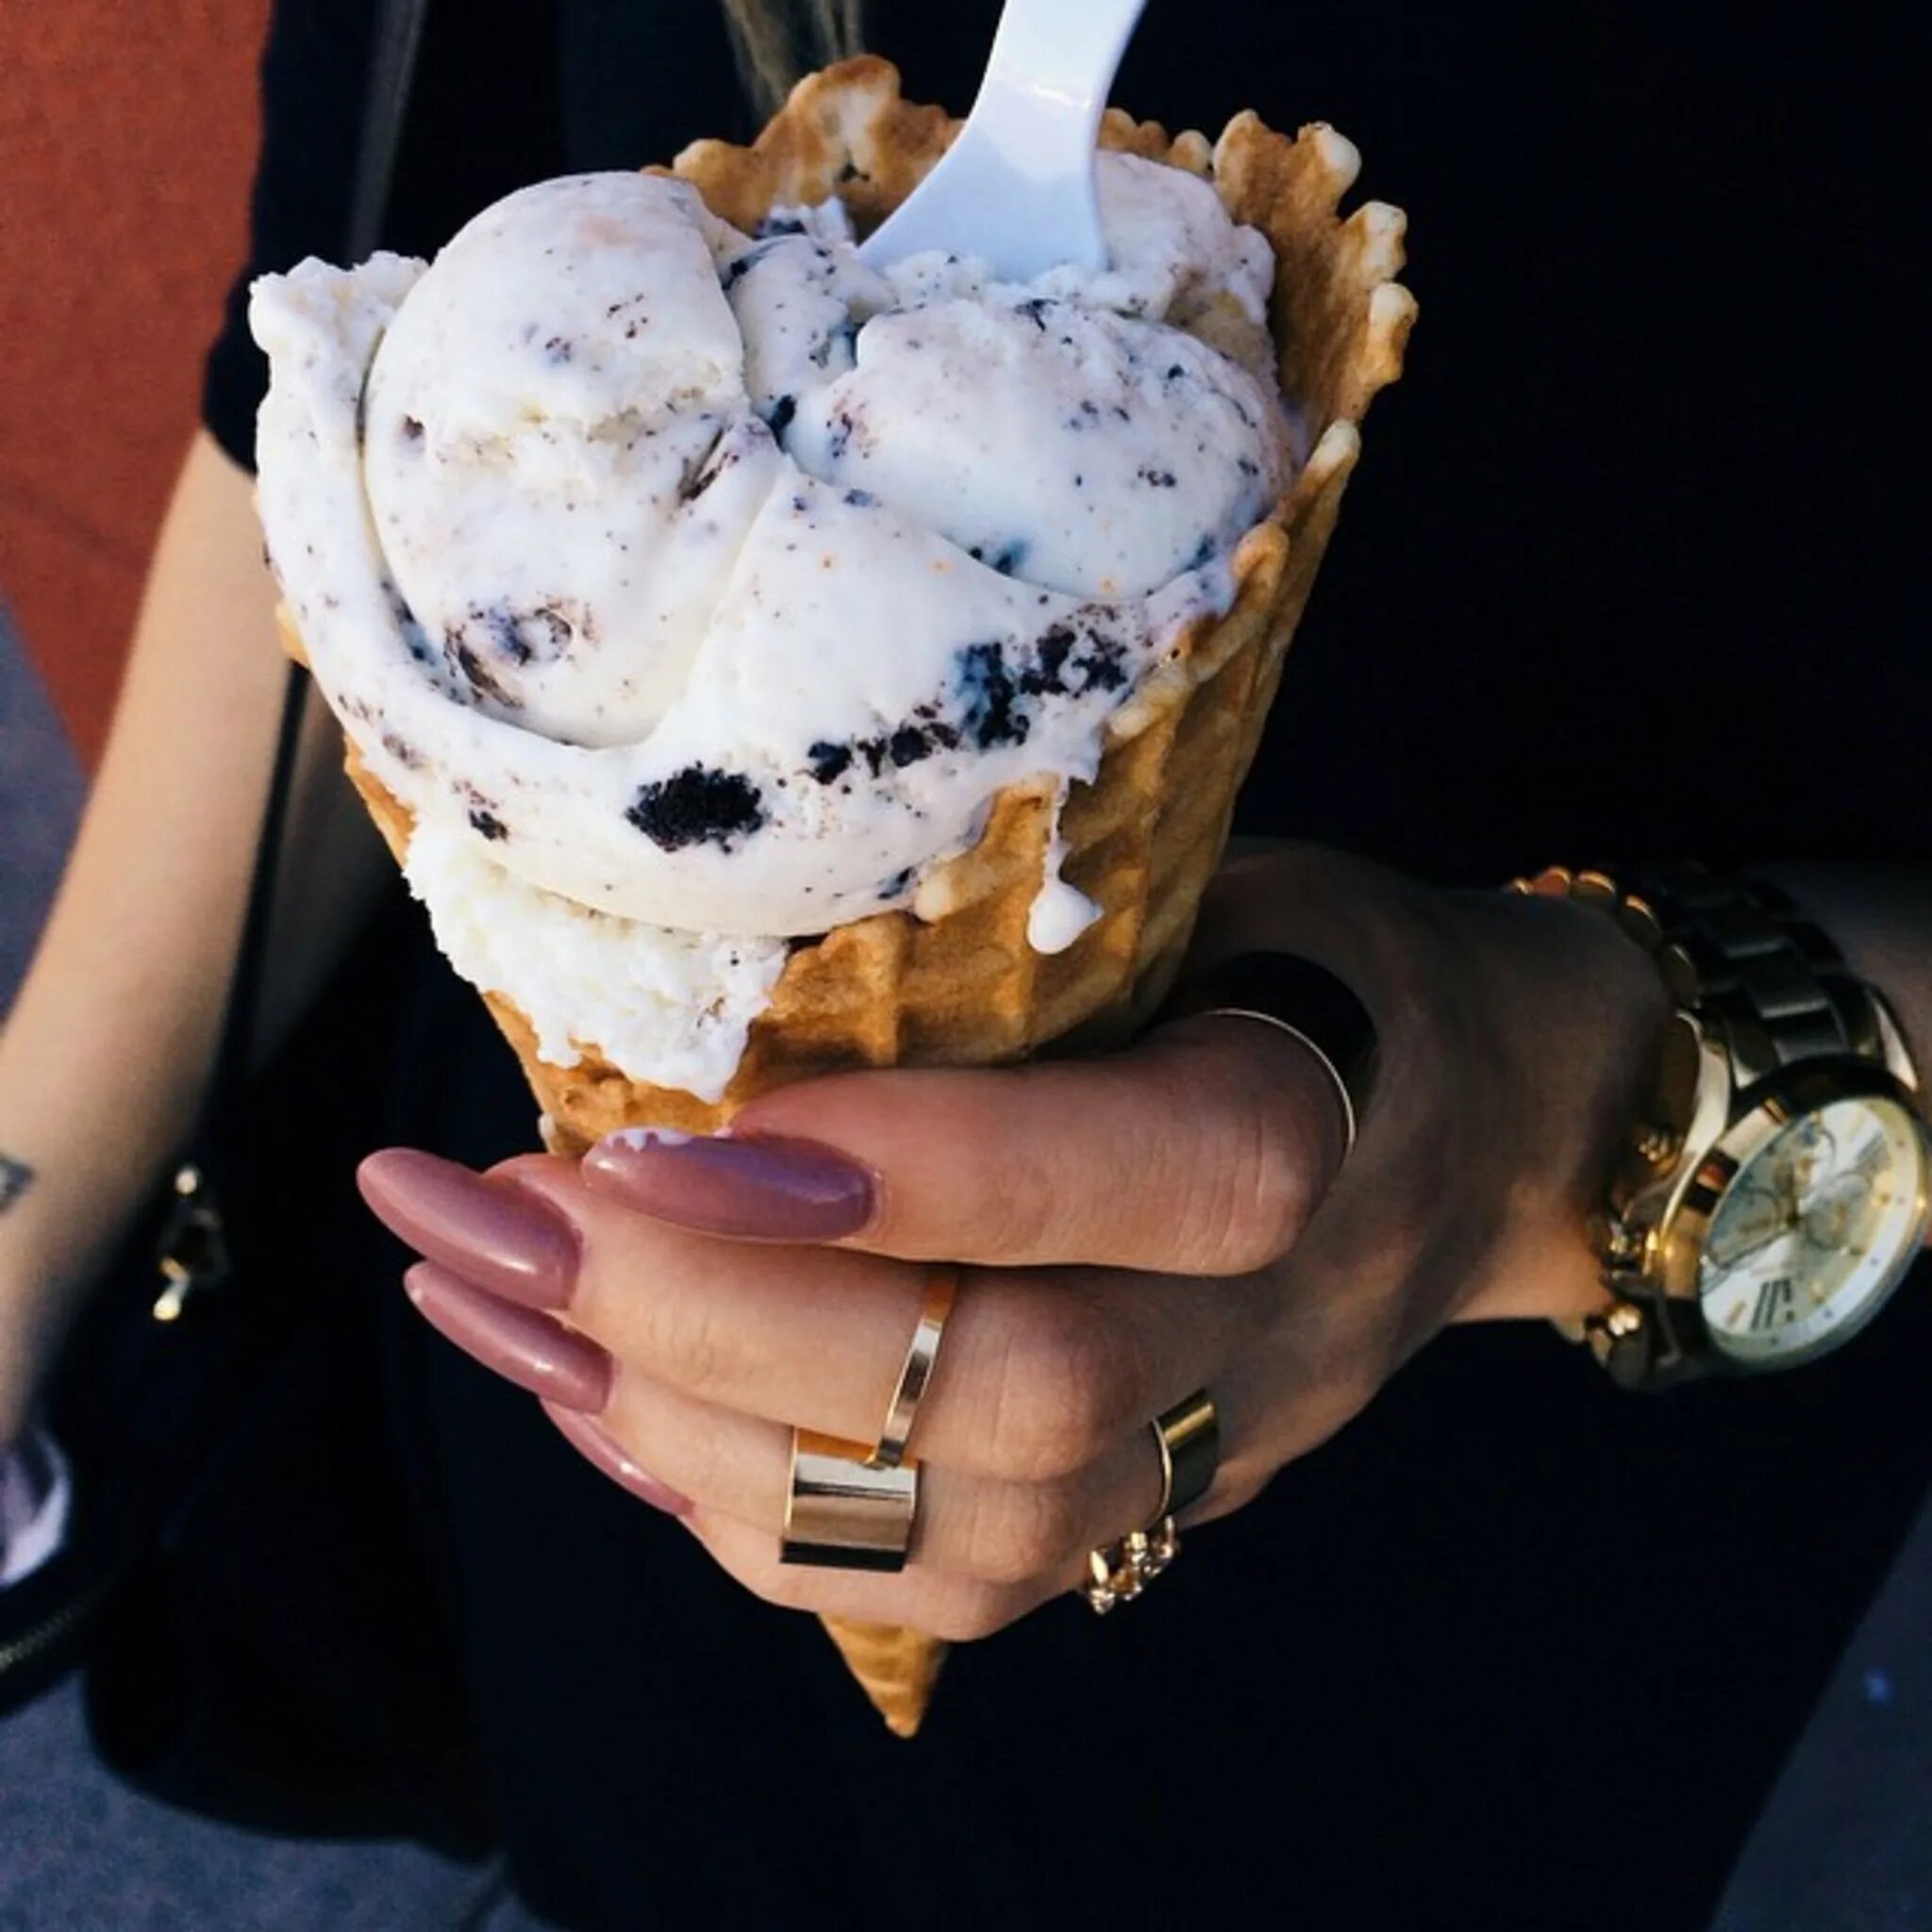 Мороженое в руке. Мороженое в руке у девушки. Мороженное в руках у девушки. Красивое мороженое.